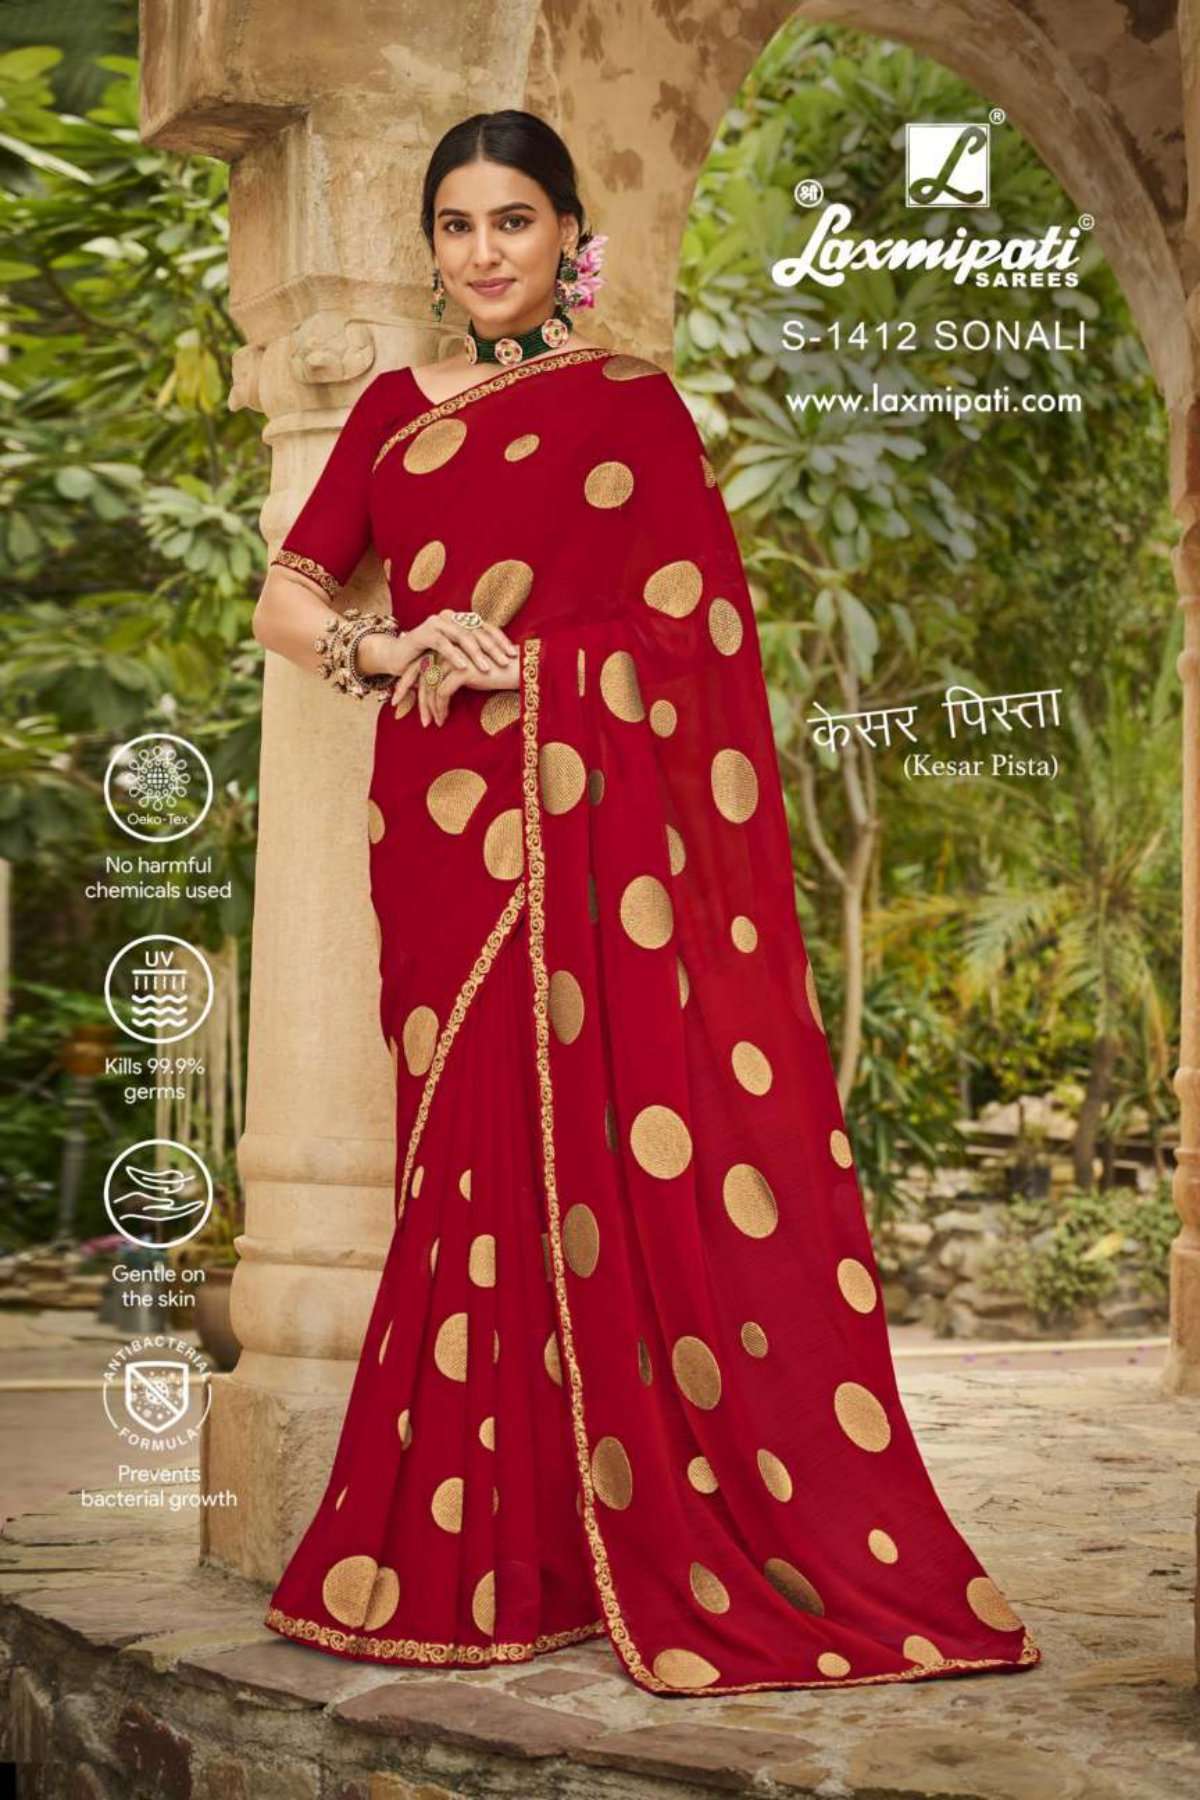 Laxmipati Apurva Chiffon with fancy Border saree collection | Saree,  Chiffon, Laxmipati sarees